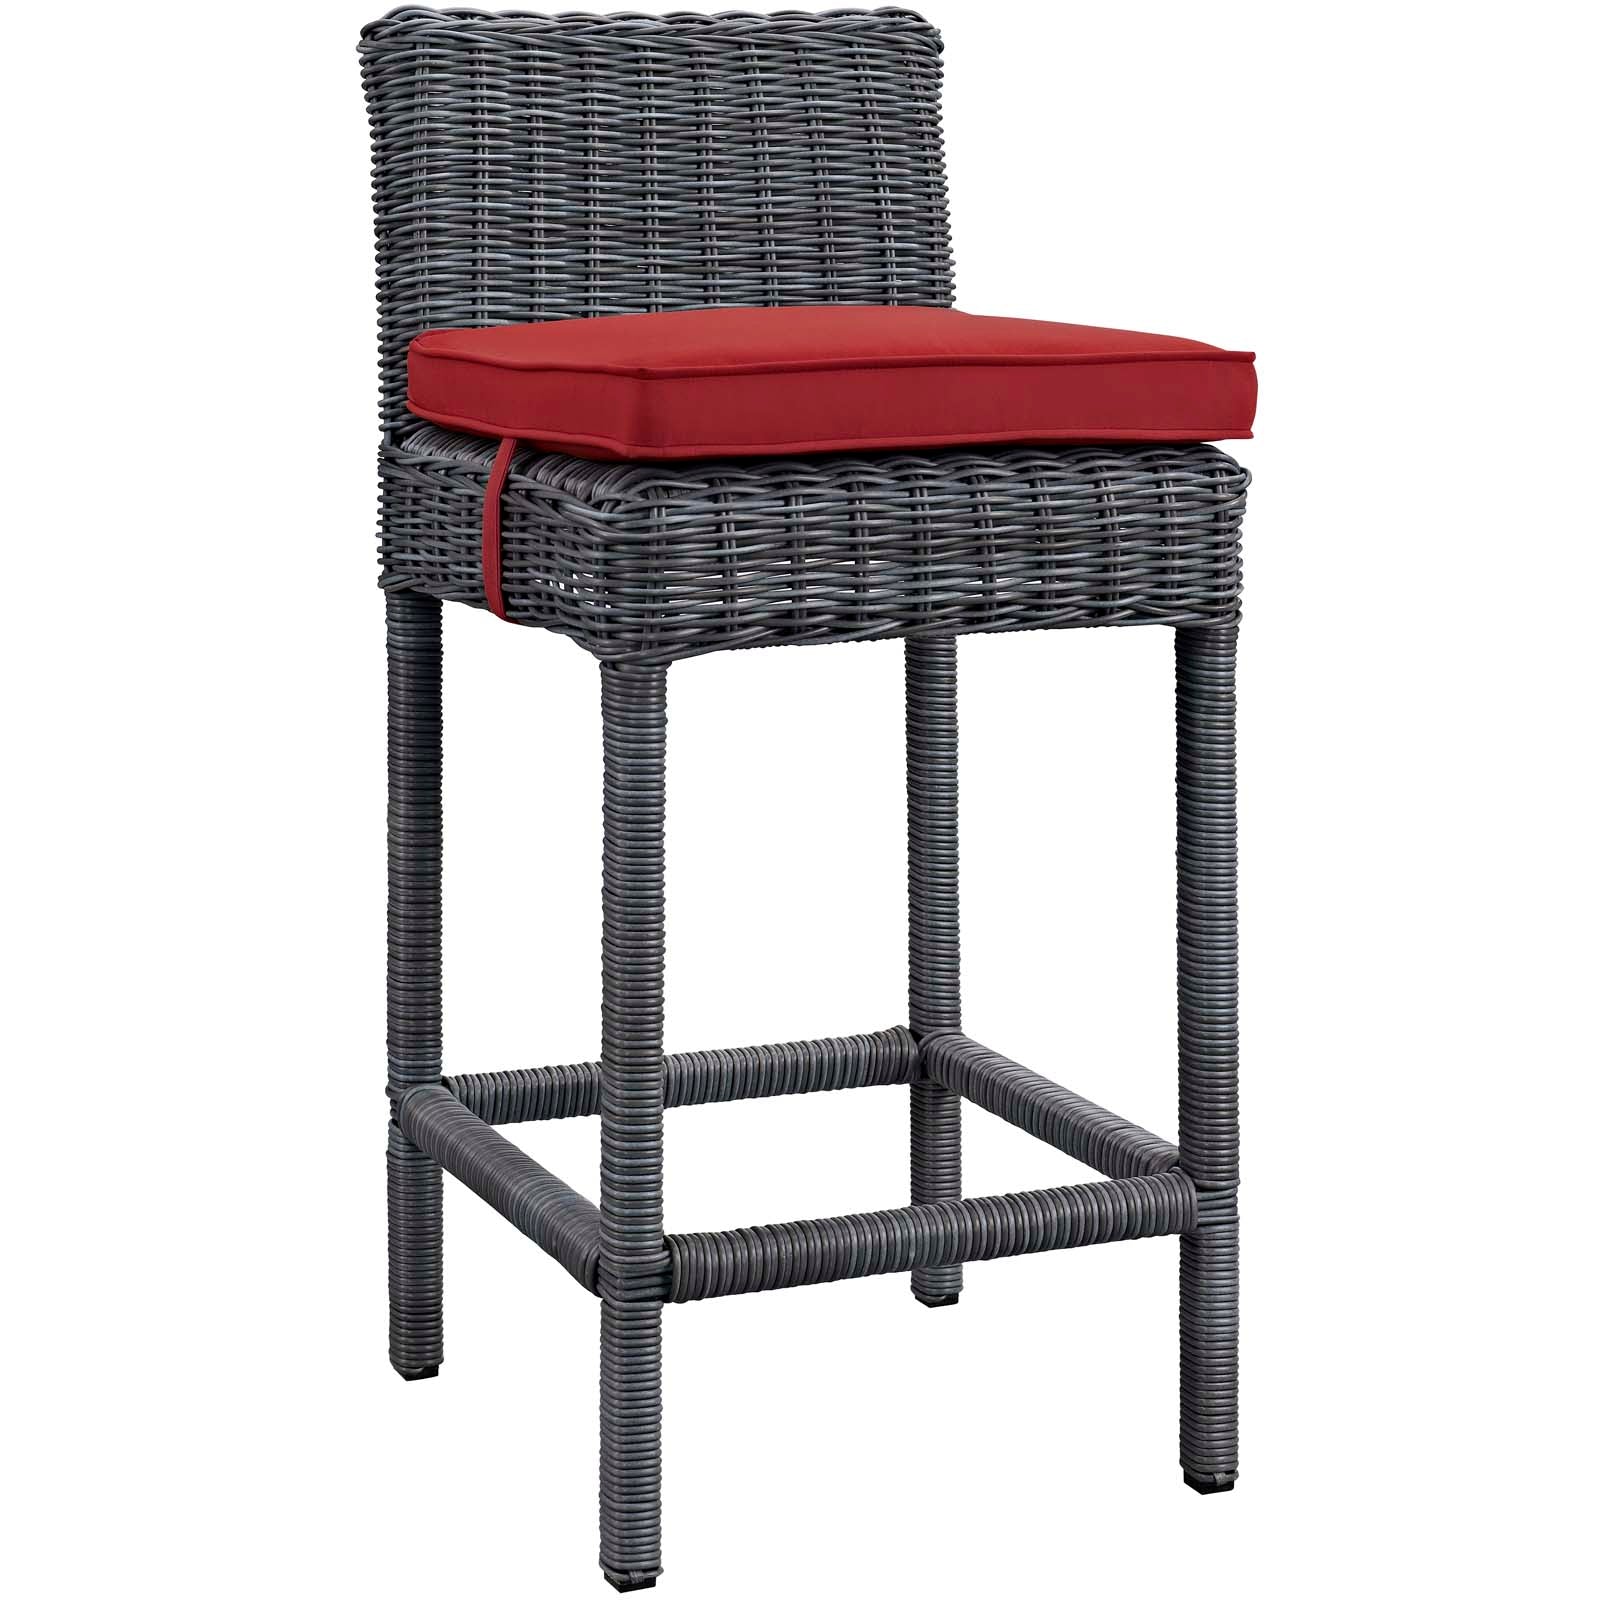 Modway Outdoor Barstools - Summon Outdoor Patio Sunbrella Bar Stool Gray Red